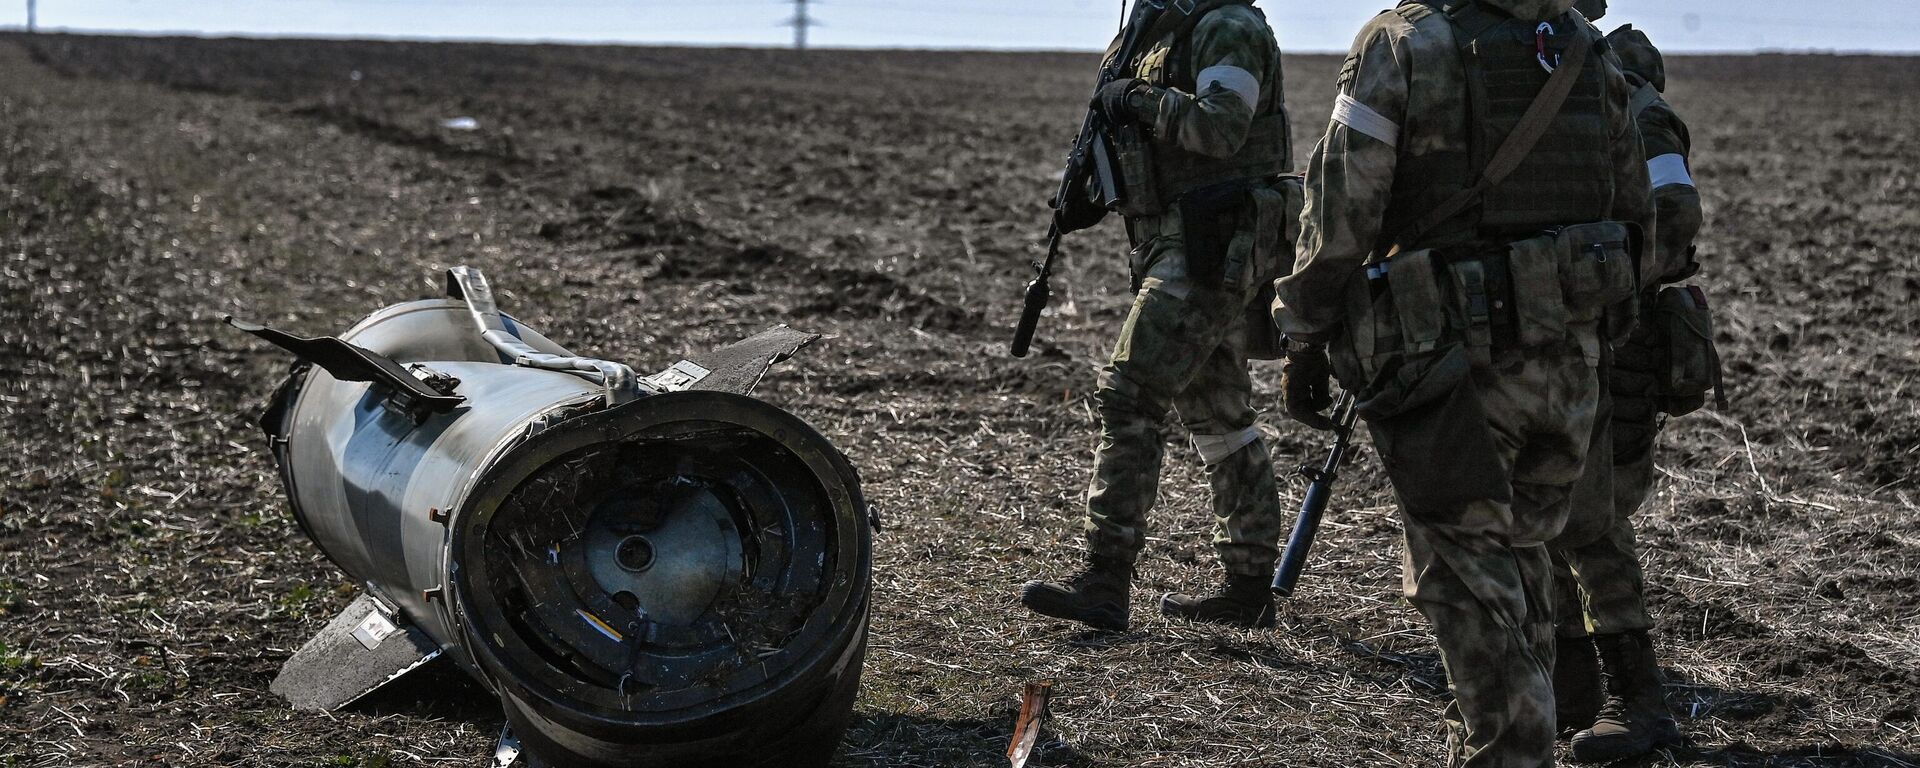 Parts of Ukraine's 'Tochka-U' missile shot down outside Berdyansk, March 2022. - Sputnik International, 1920, 15.04.2022